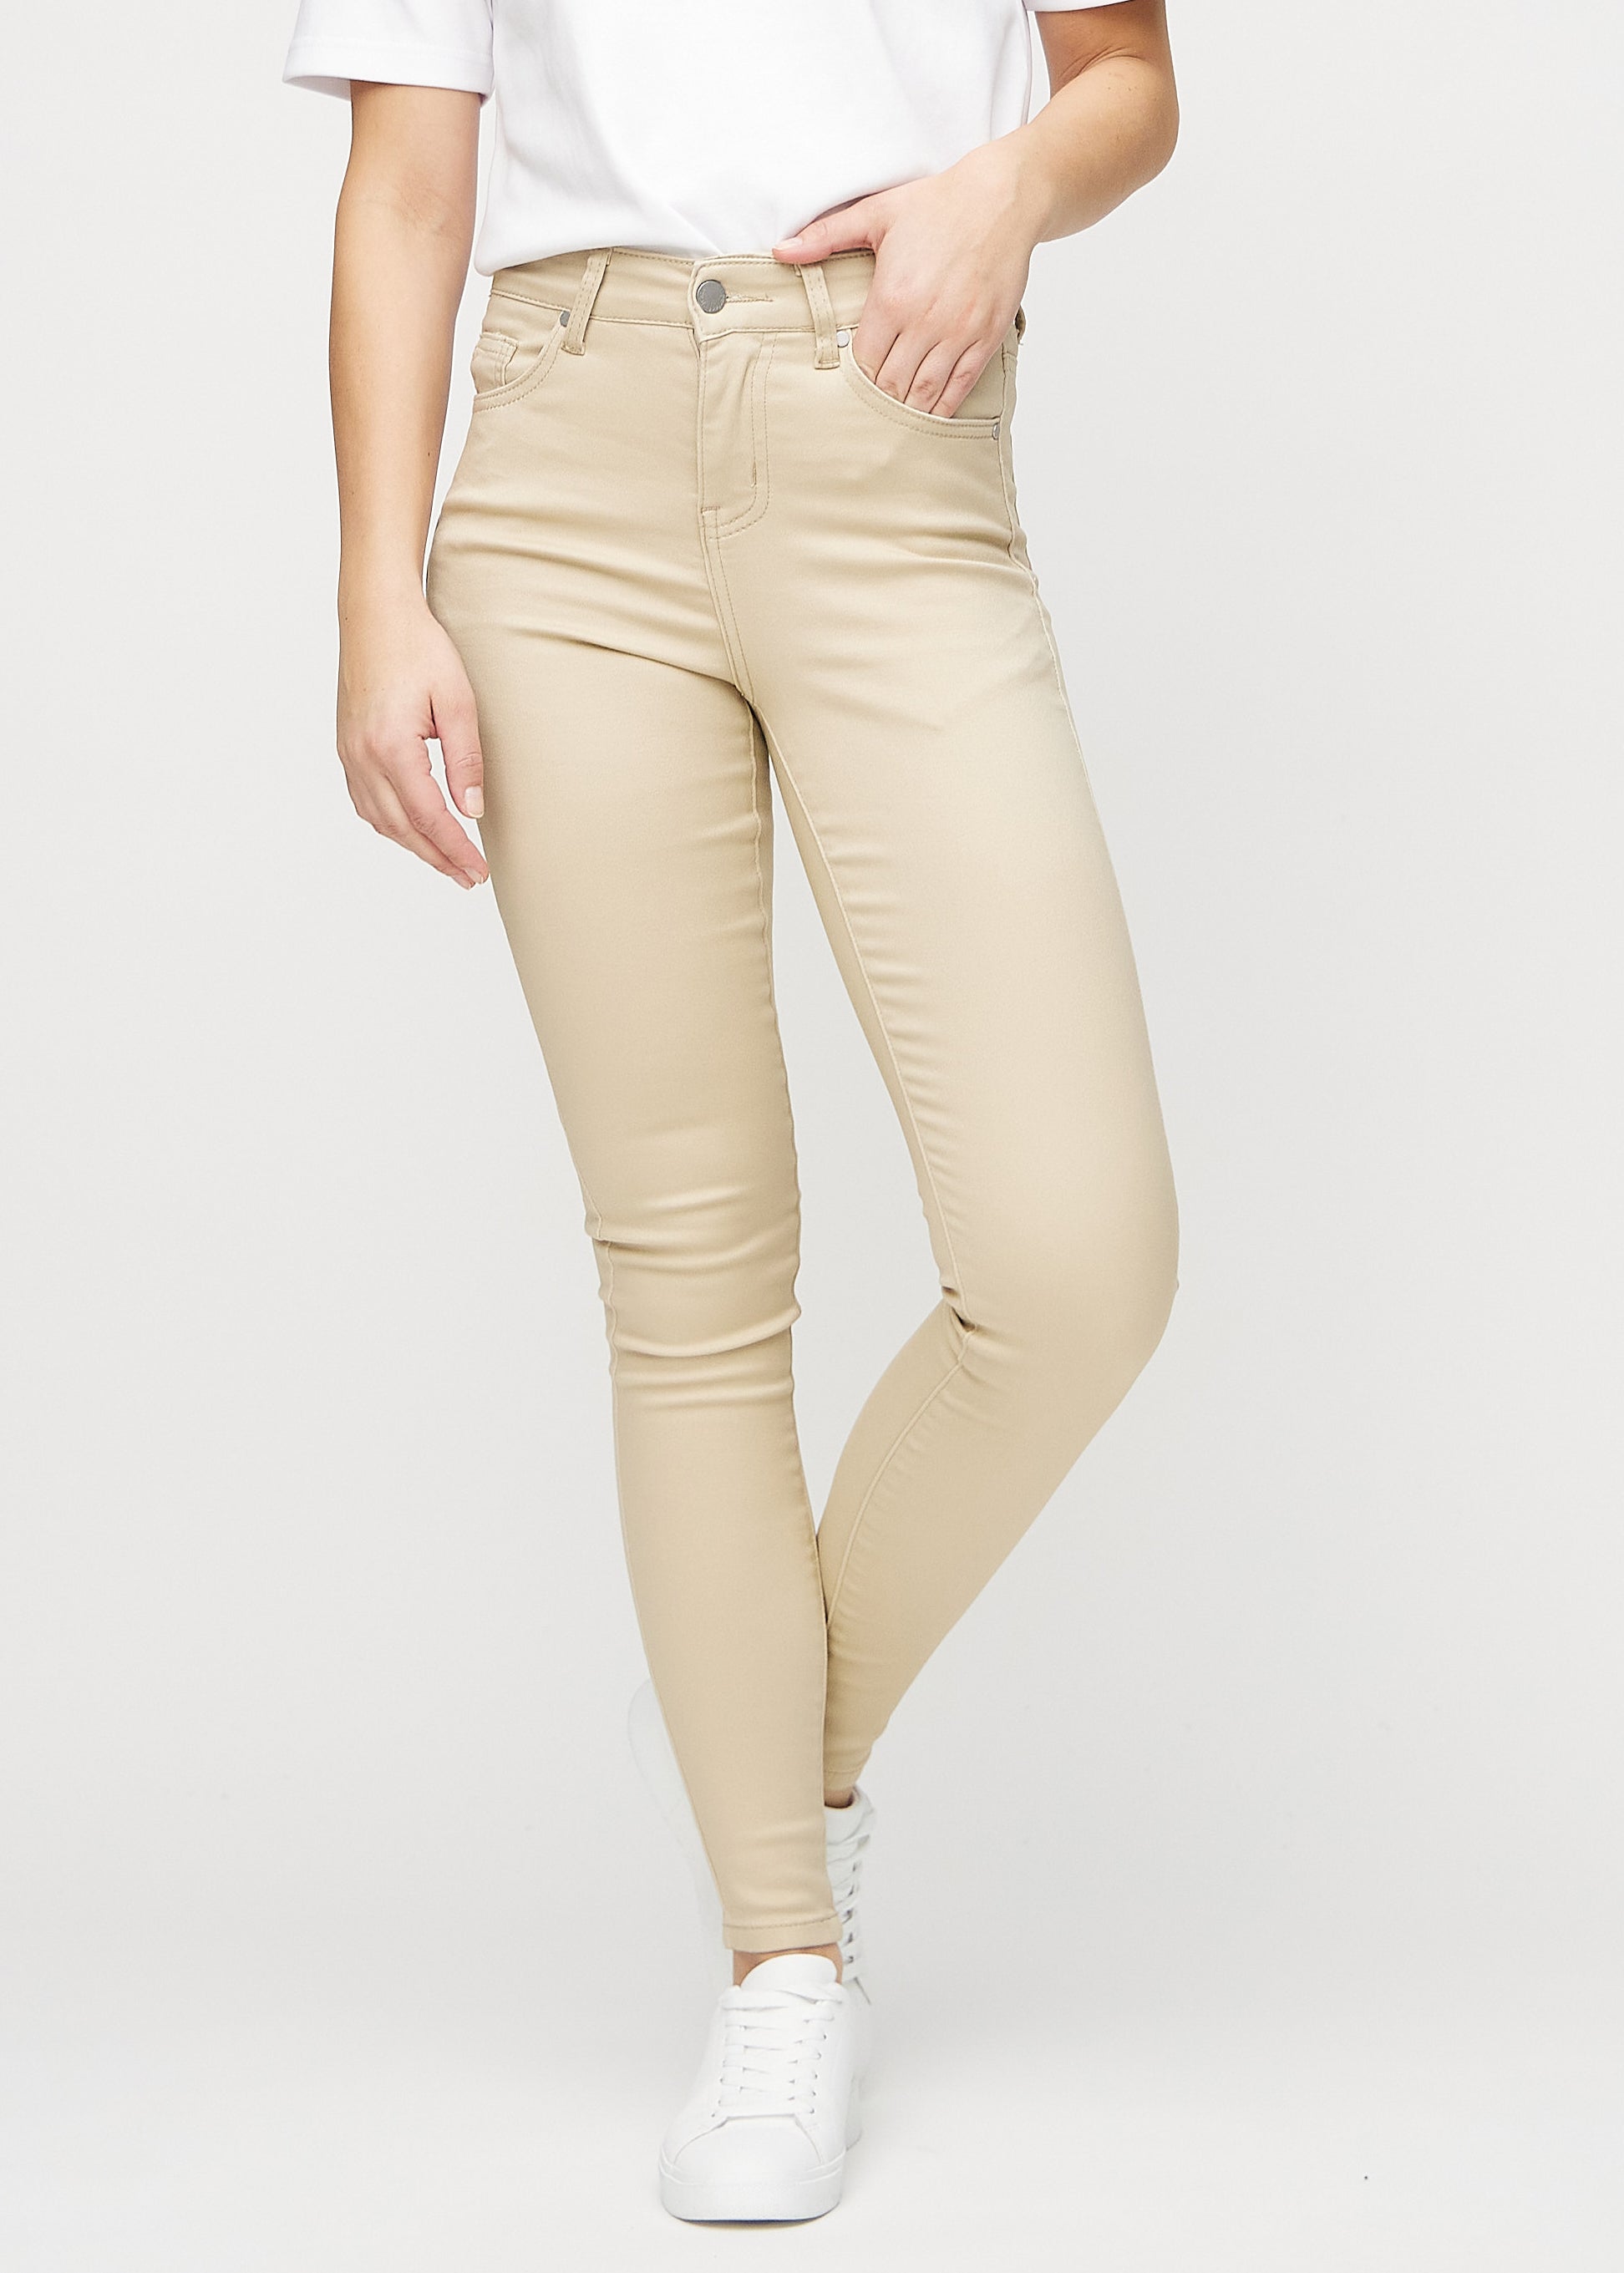 Women's Khaki Pants High Waist Super Stretchable Jeans